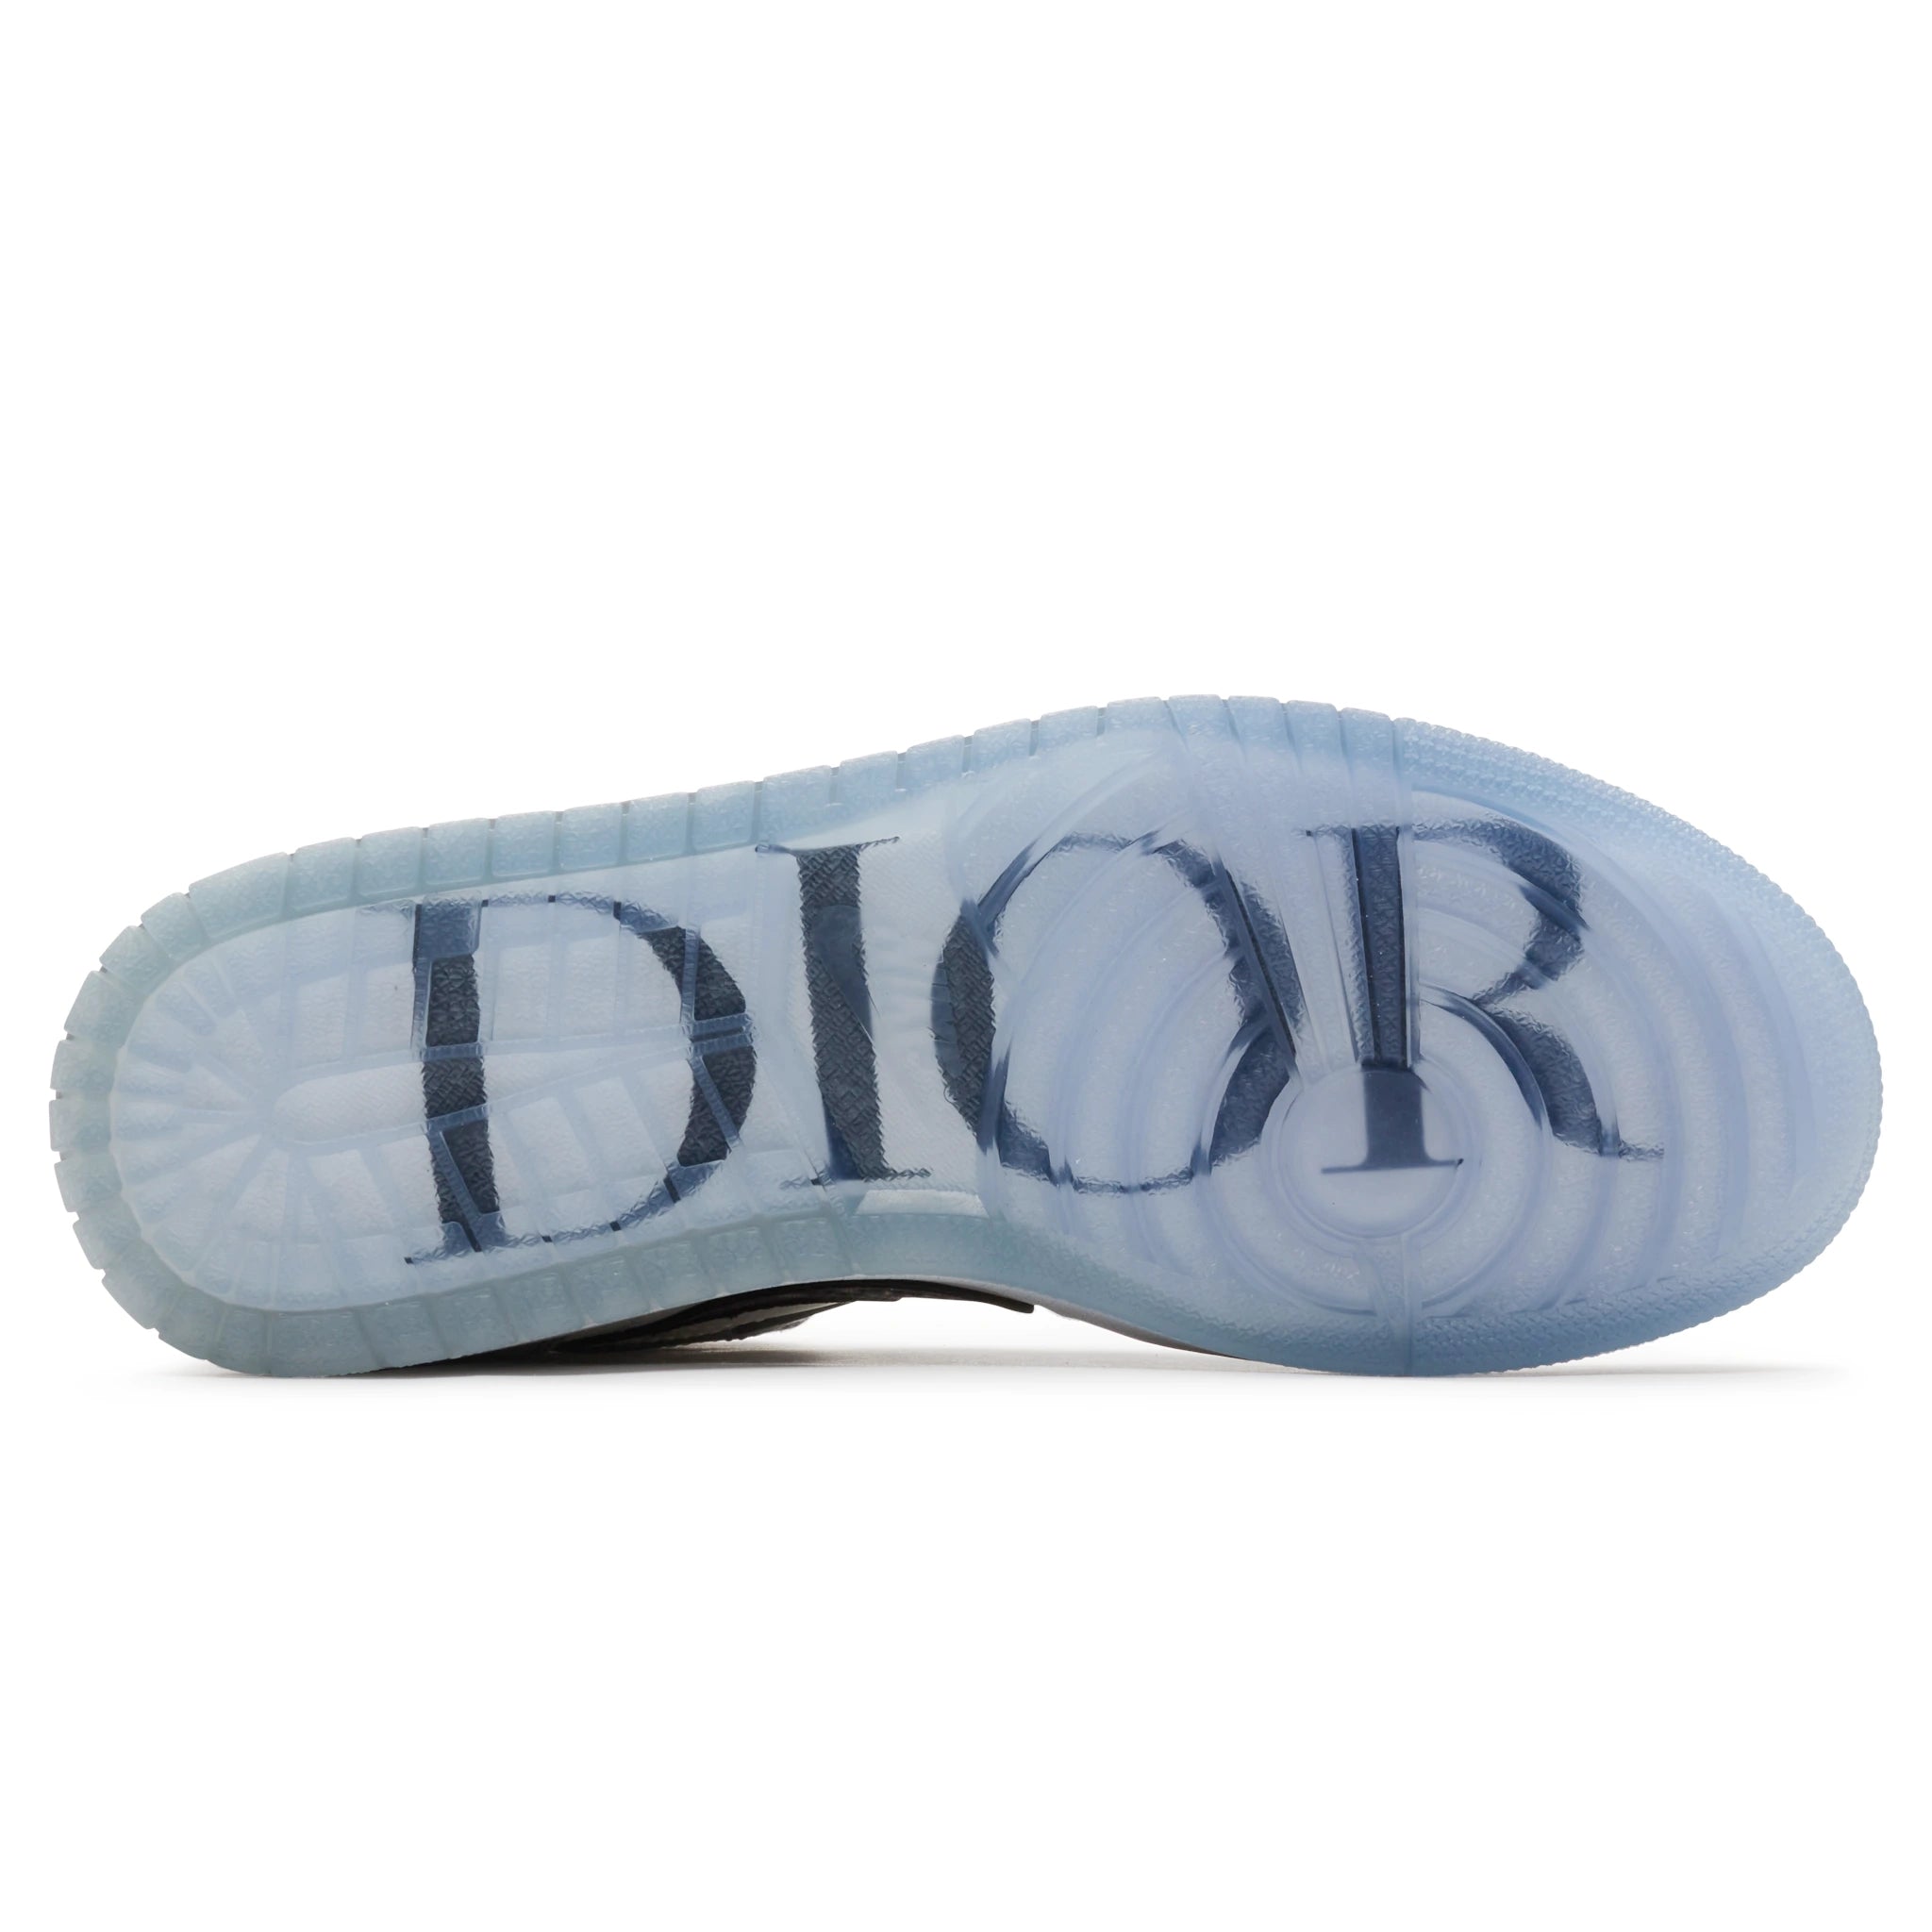 Image of Dior x Air Jordan 1 High OG Grey Sneaker (Mark On Toe Cap)